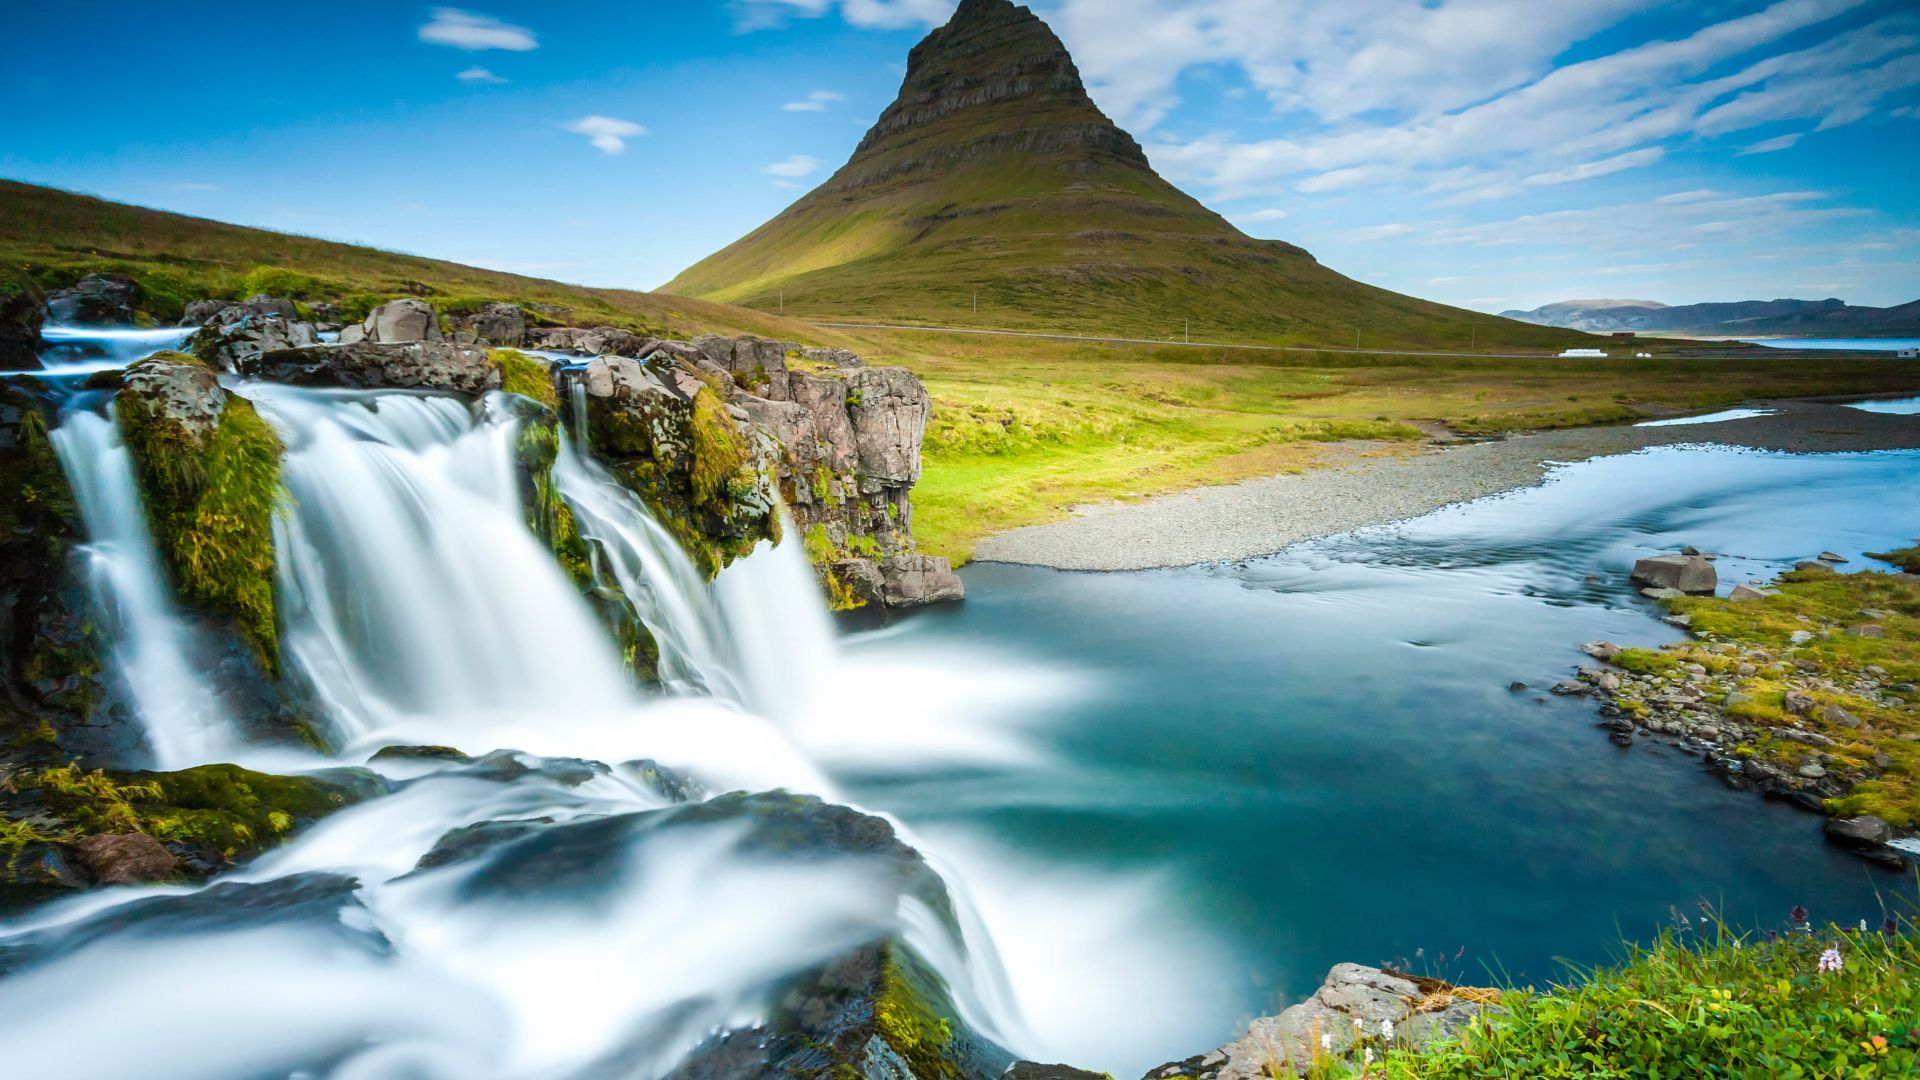 Рейкьявик, Reykjavik, Iceland, waterfall, river, mountain, 4k (horizontal)